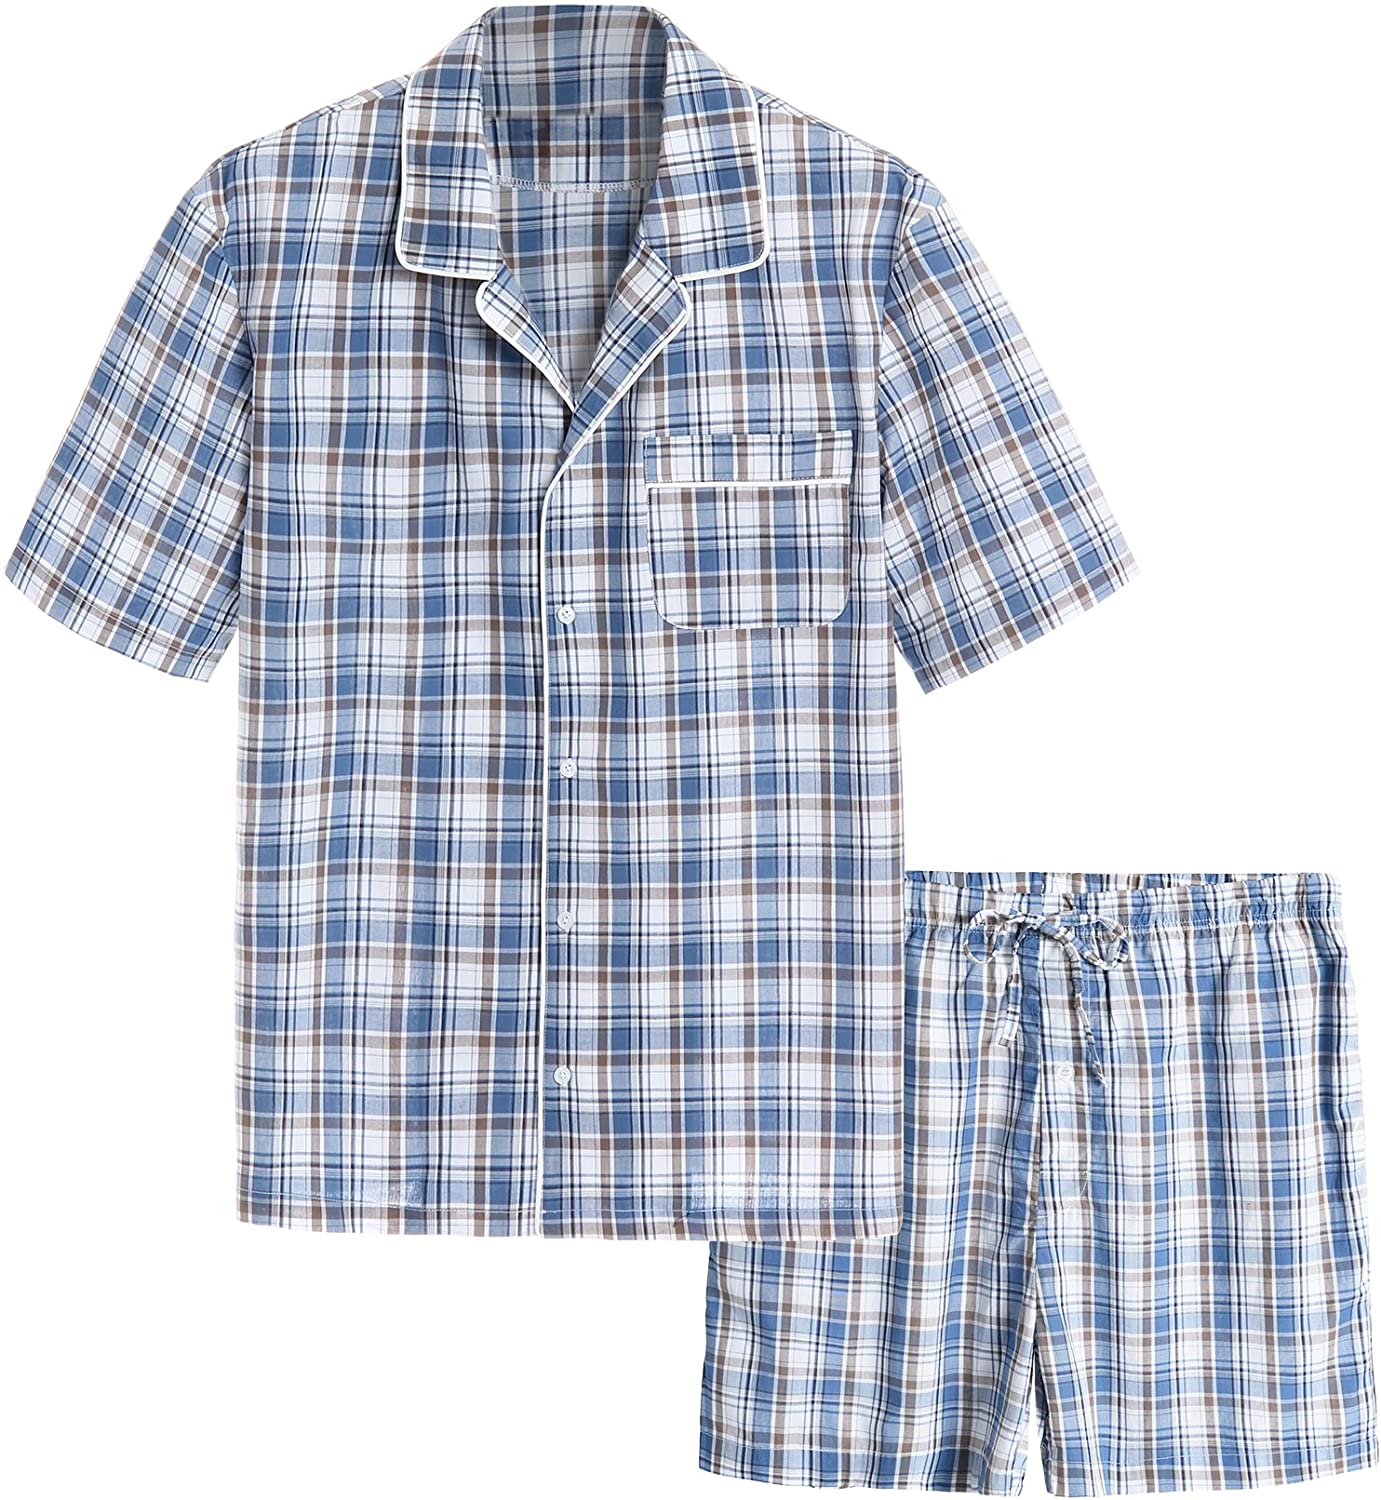 Details about   Latuza Men's Cotton Woven Short Sleepwear Pajama Set 